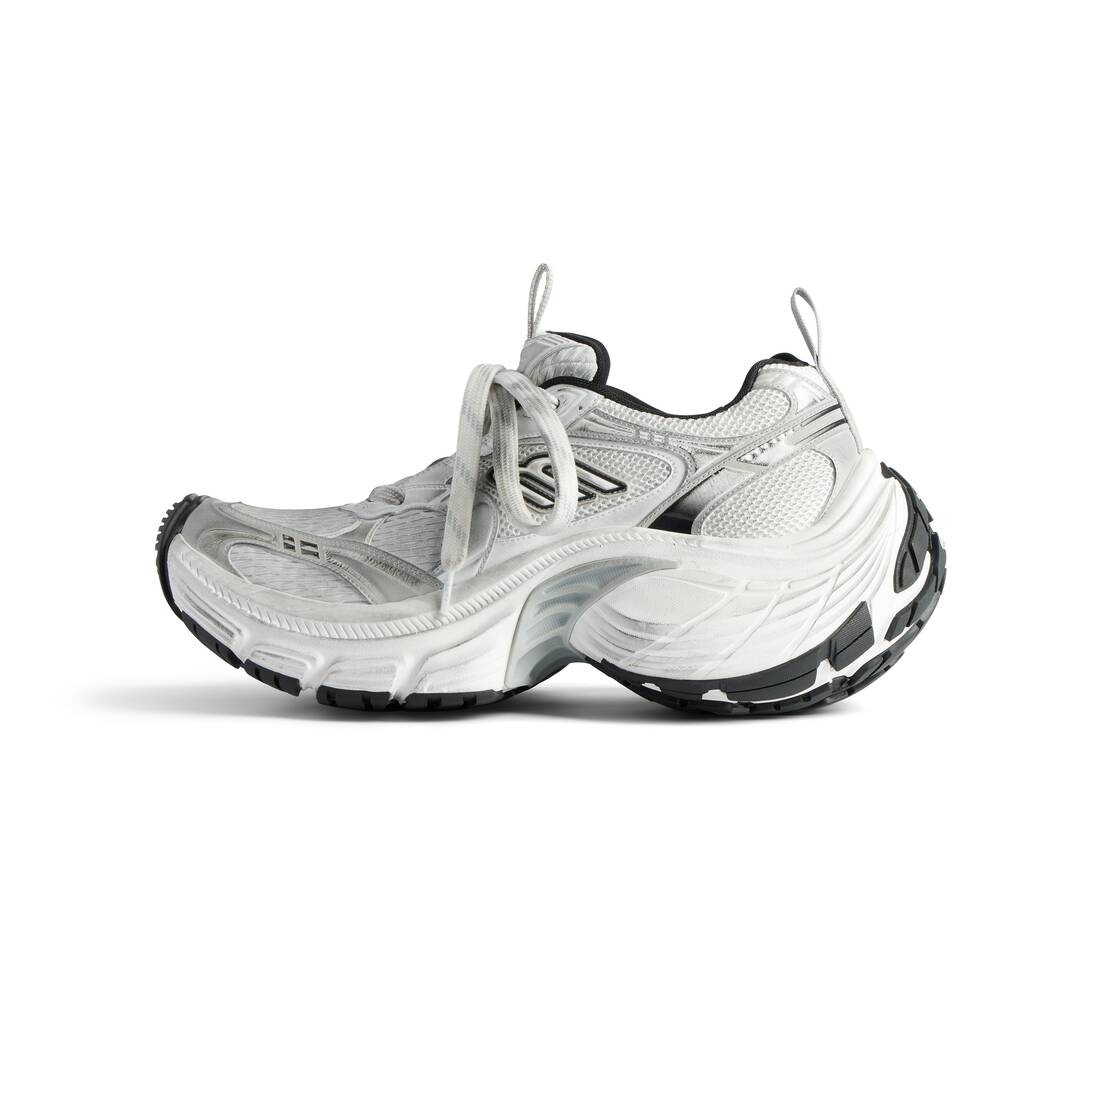 Men's 10xl Sneaker in White/black/gris - 4